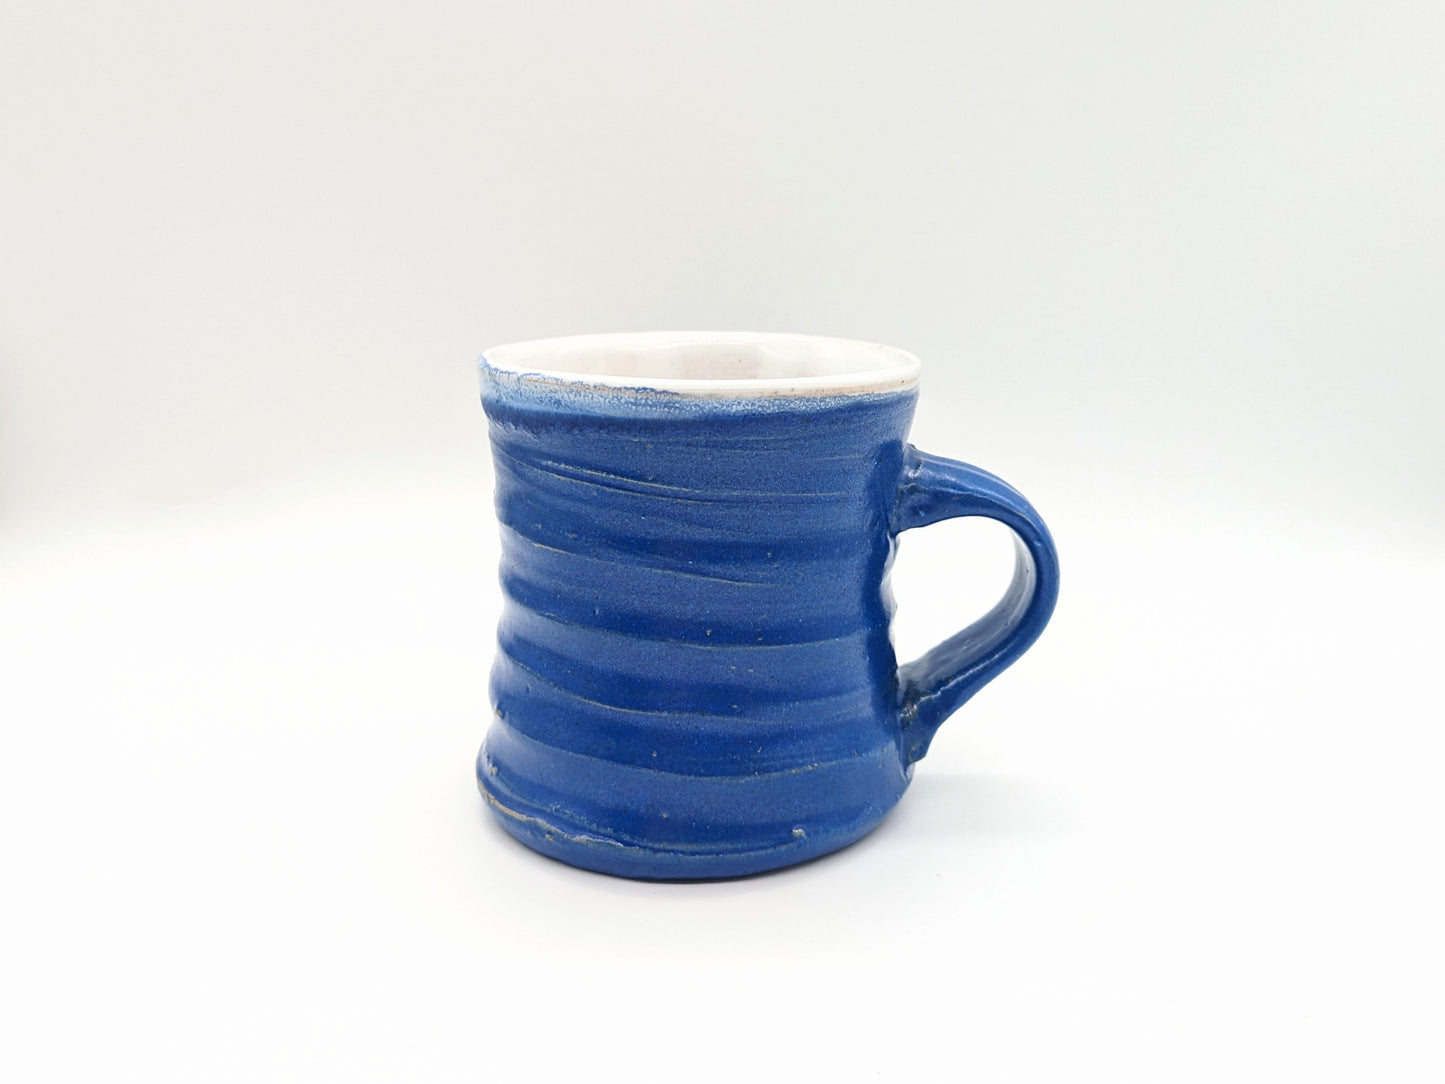 Mug by Waterport Pottery